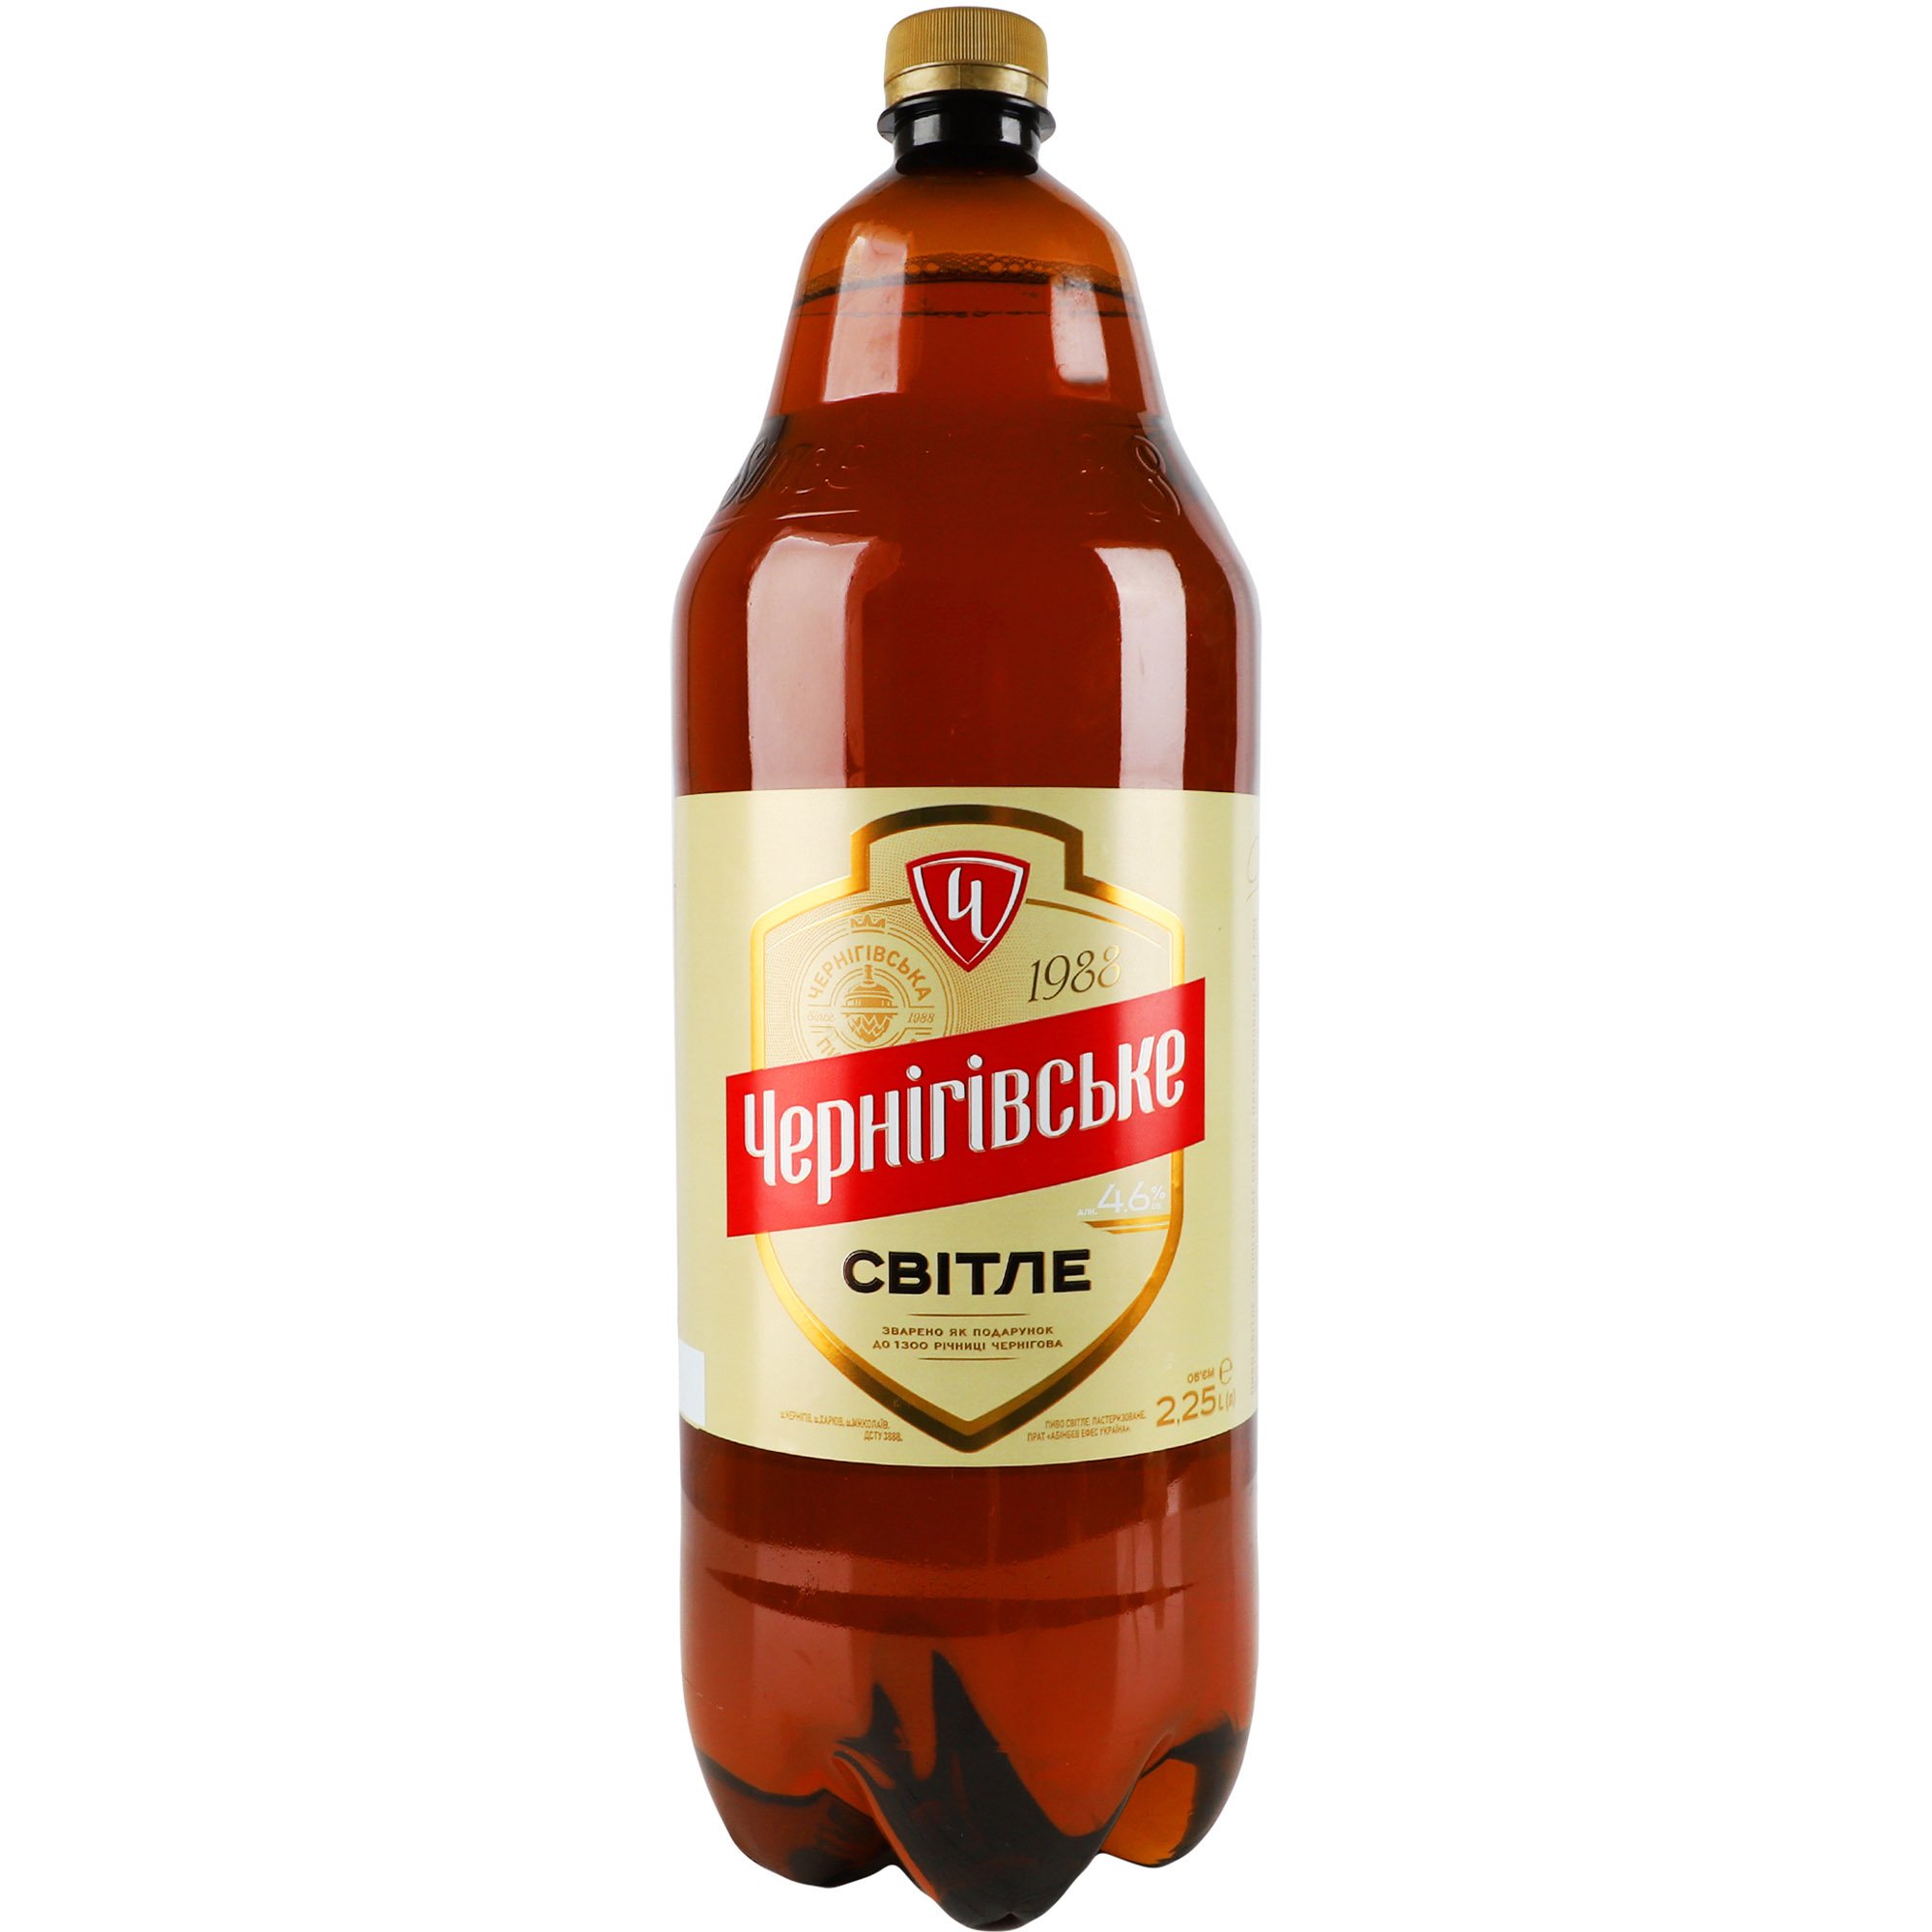 Пиво Чернігівське светлое 4.6% 2.25 л - фото 1